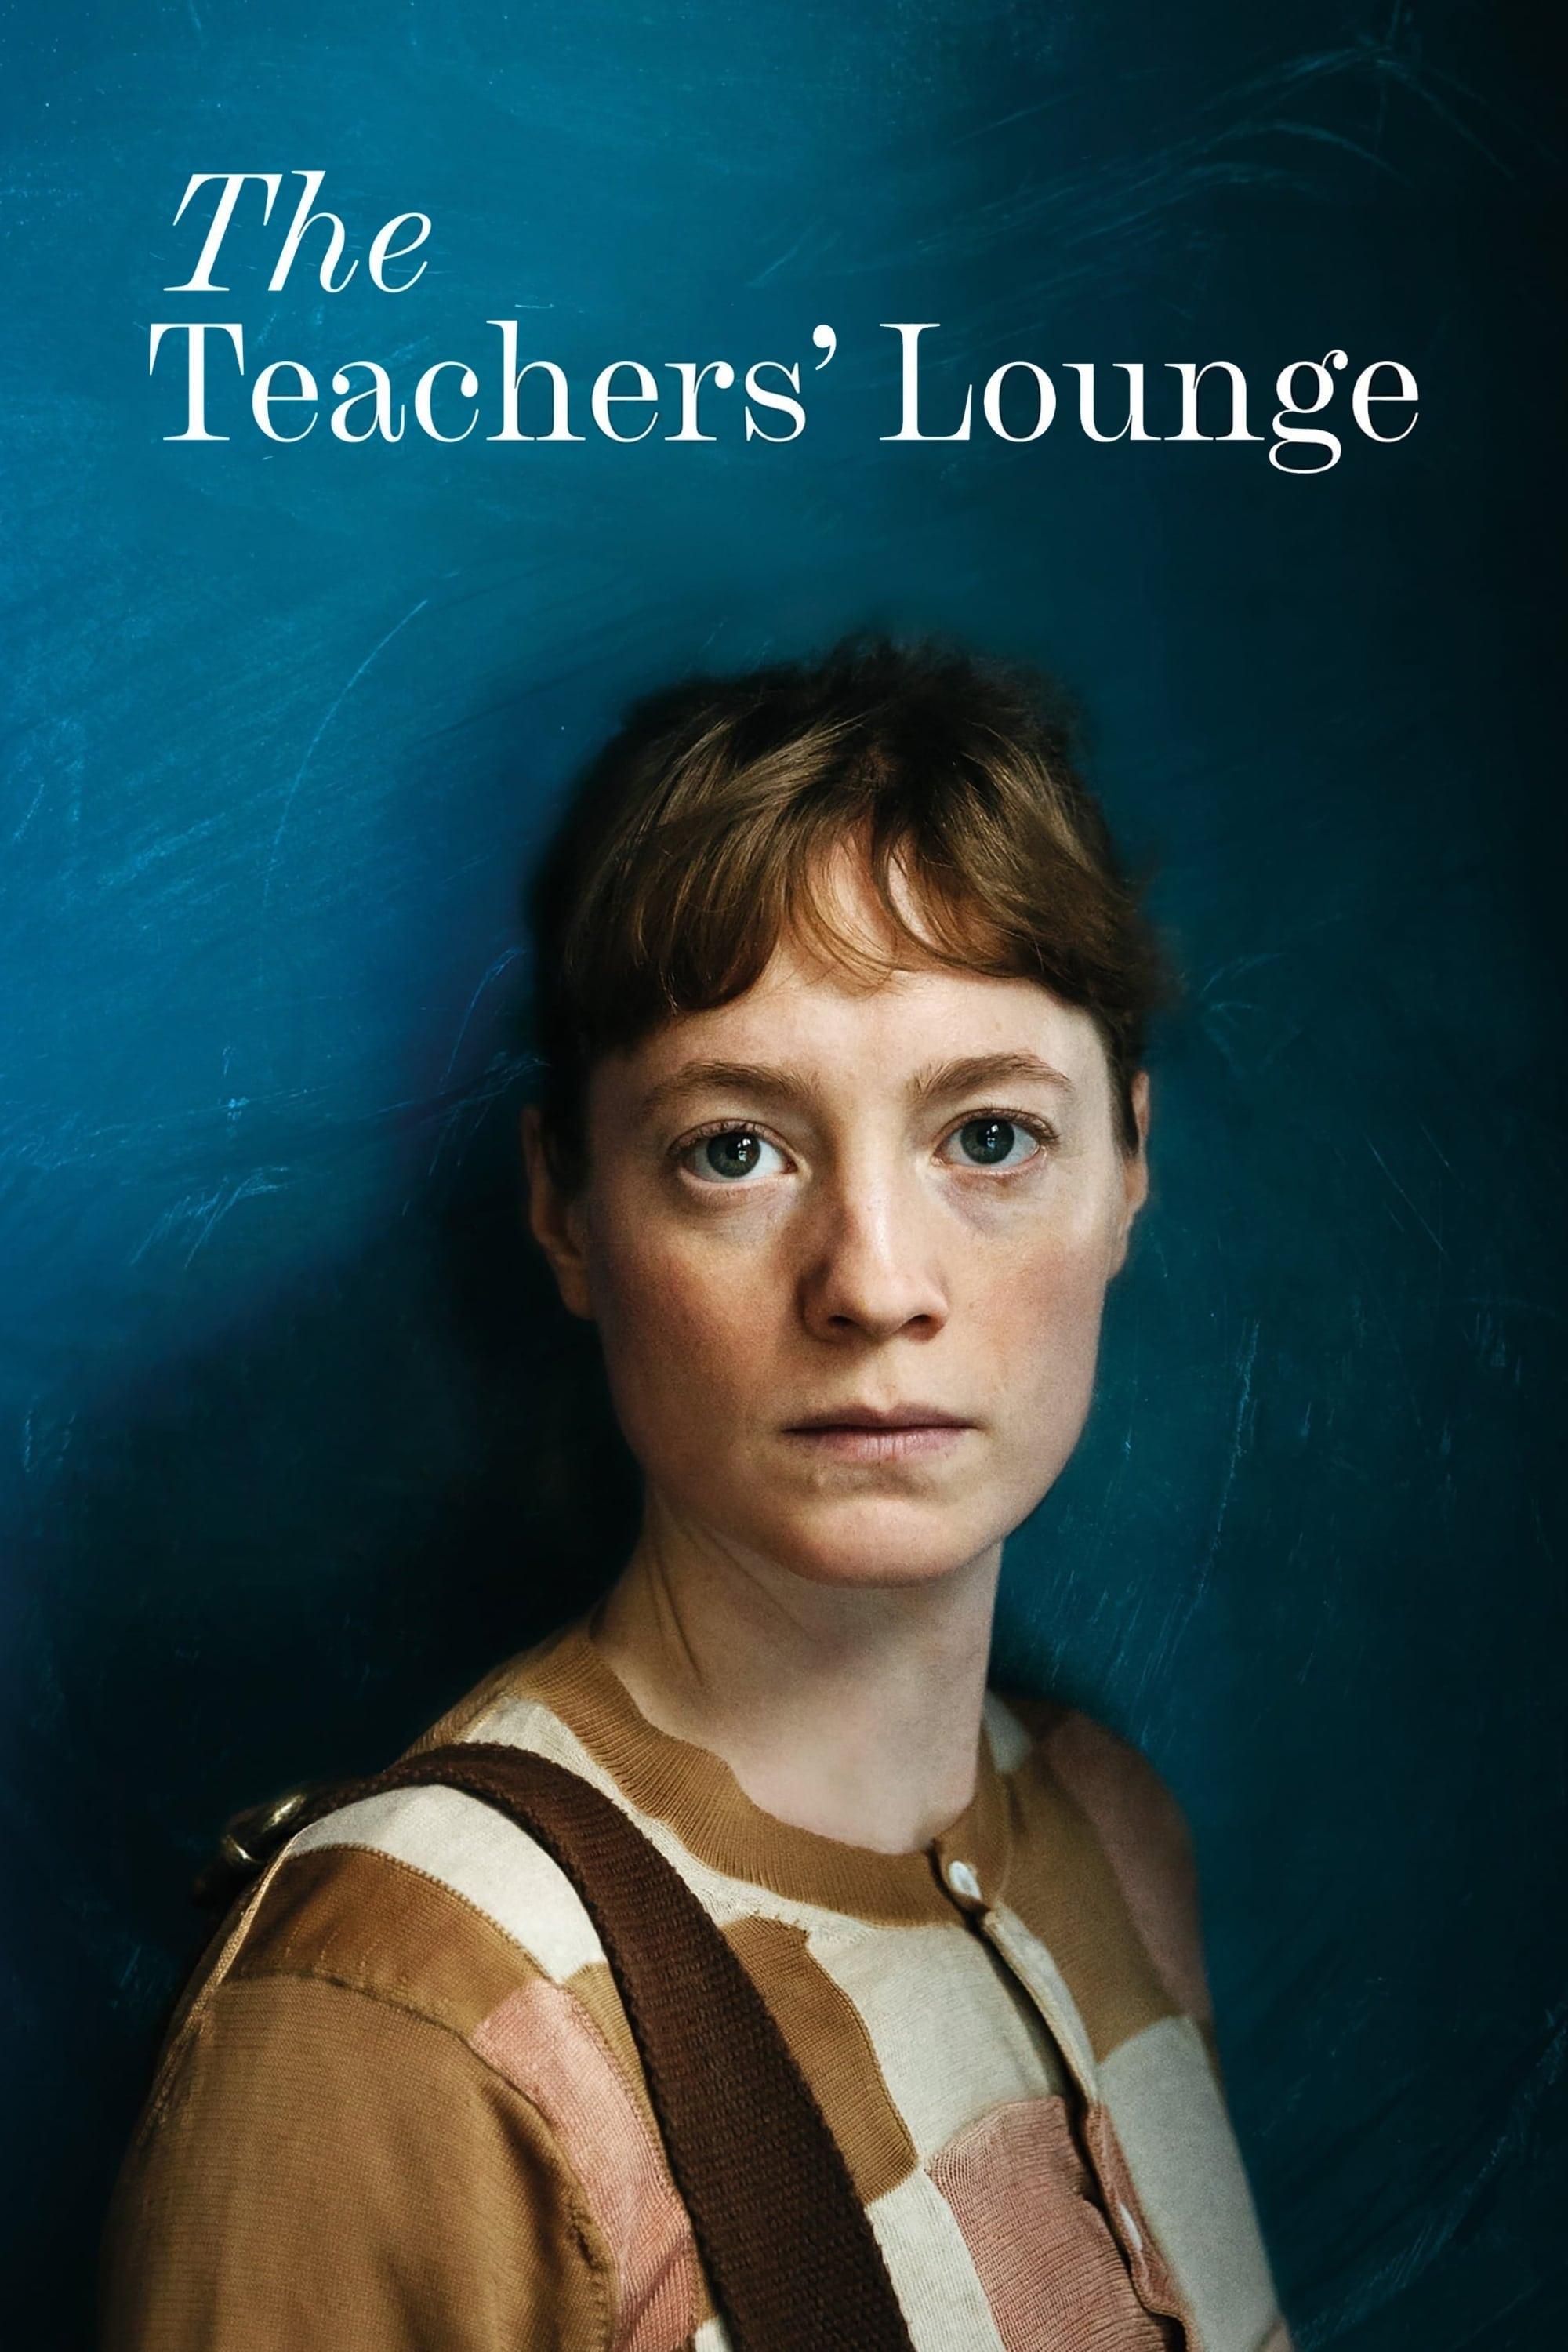 The Teachers' Lounge poster